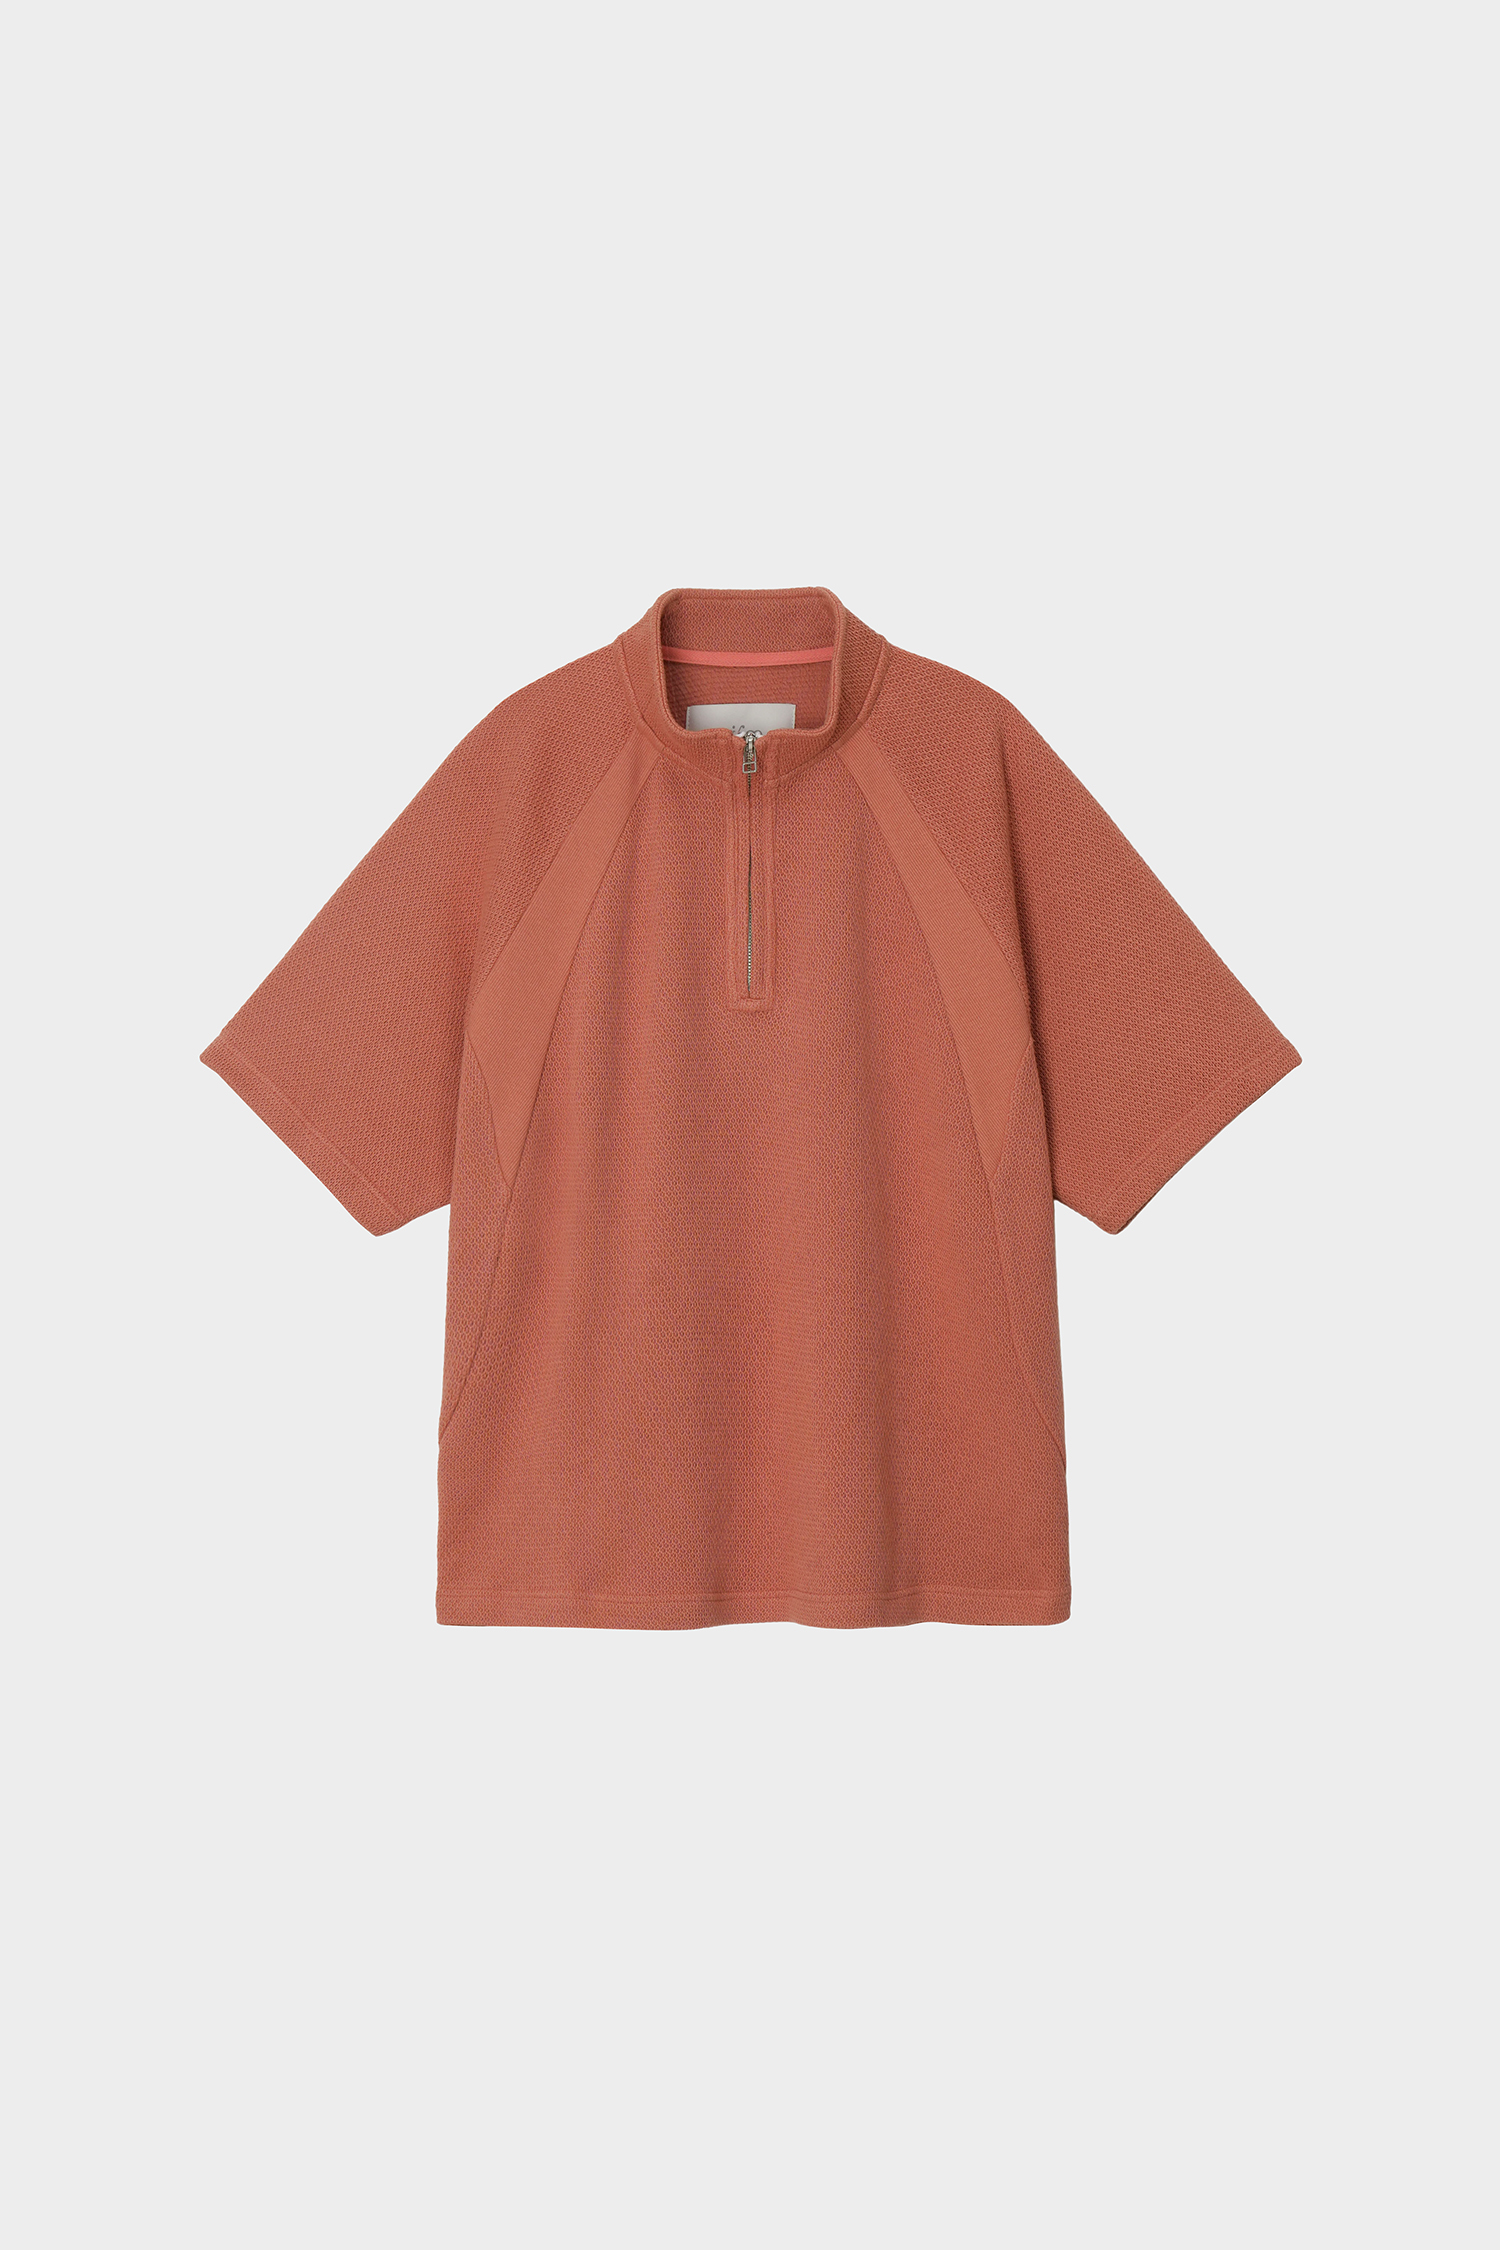 Deflect Half Zip-Up Shirts _ Brunt Coral